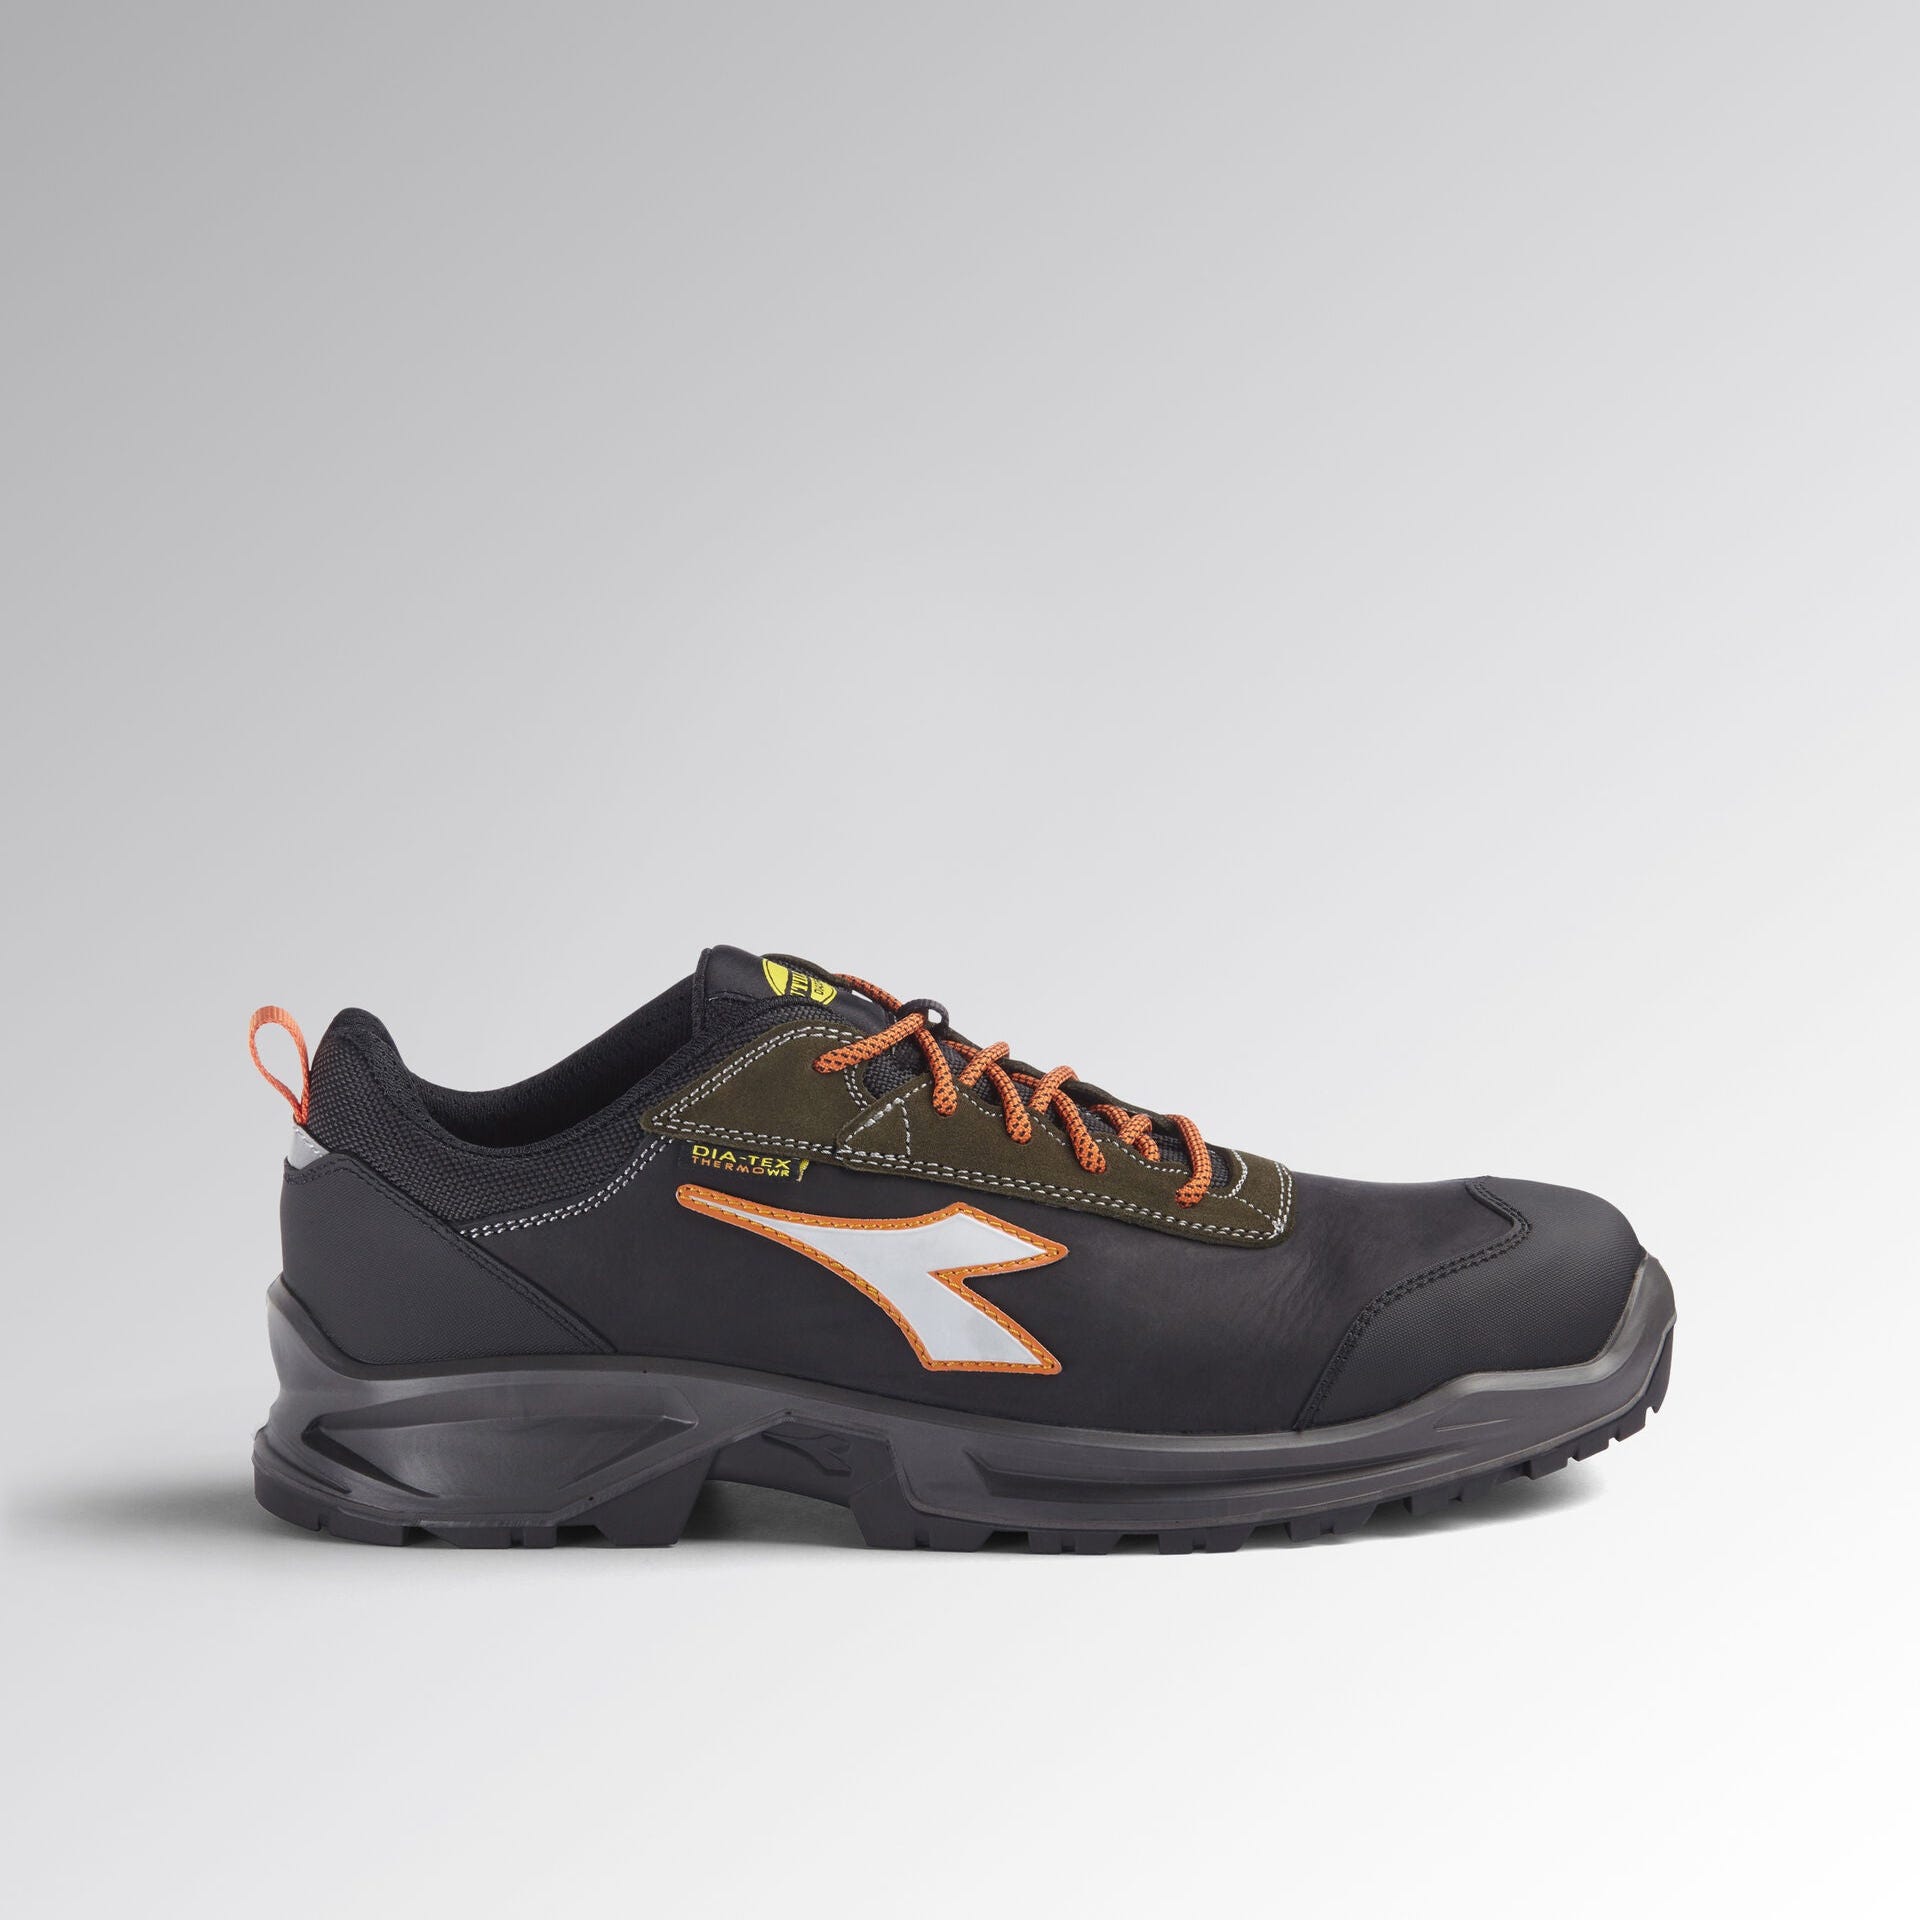 Chaussures imperméables thermo-isolantes SPORT DIATEX S3 Noir / Orange 37 5